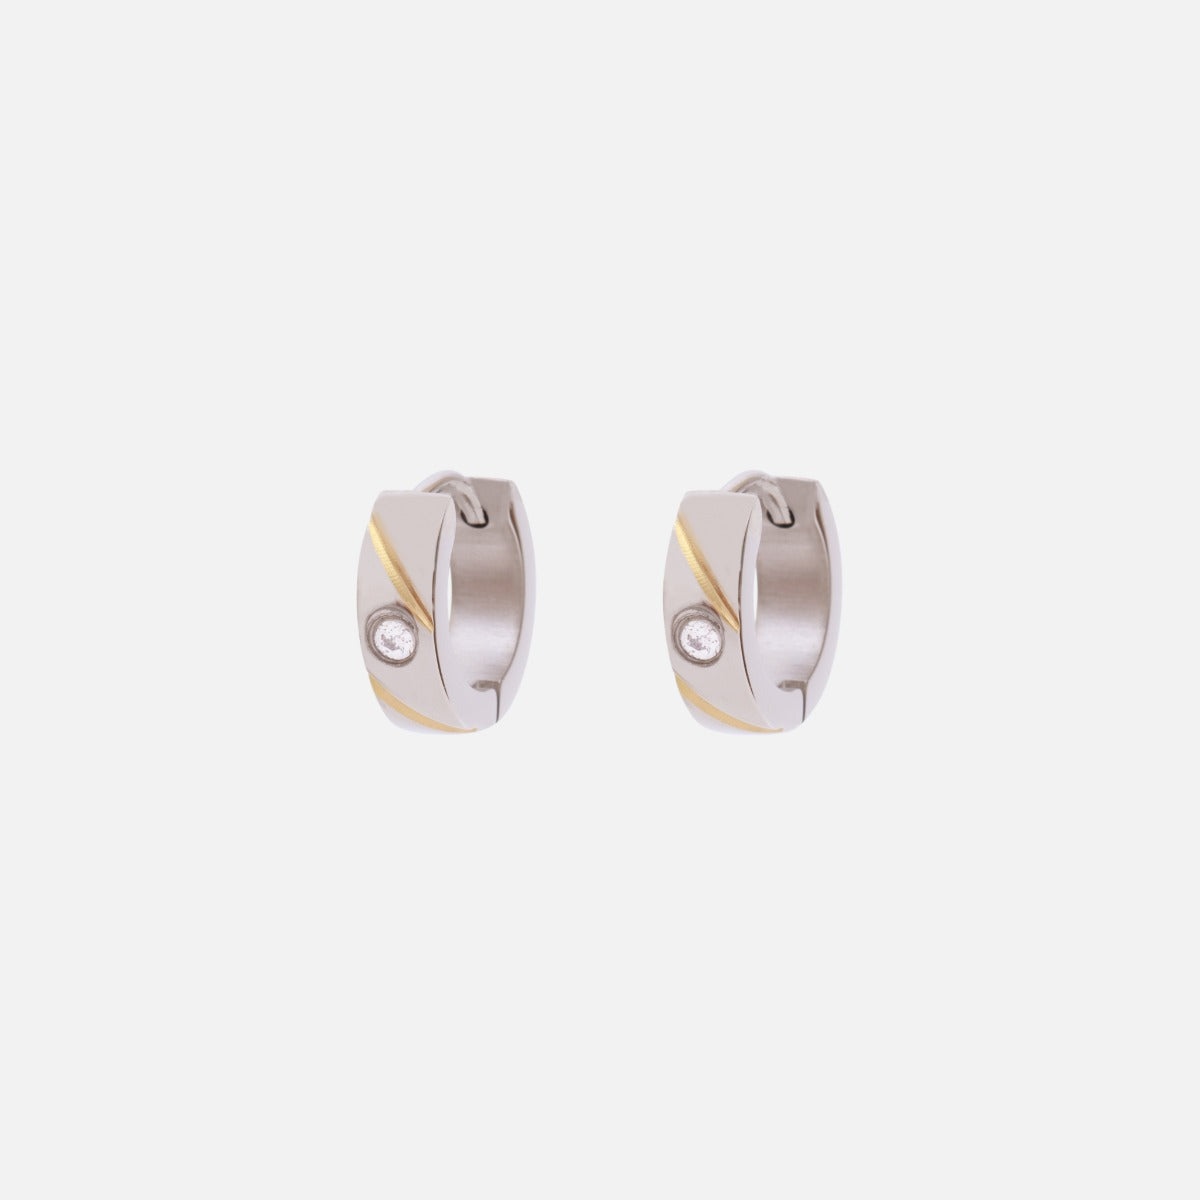 13mm silvered hoop earrings with cubic zirconia stones